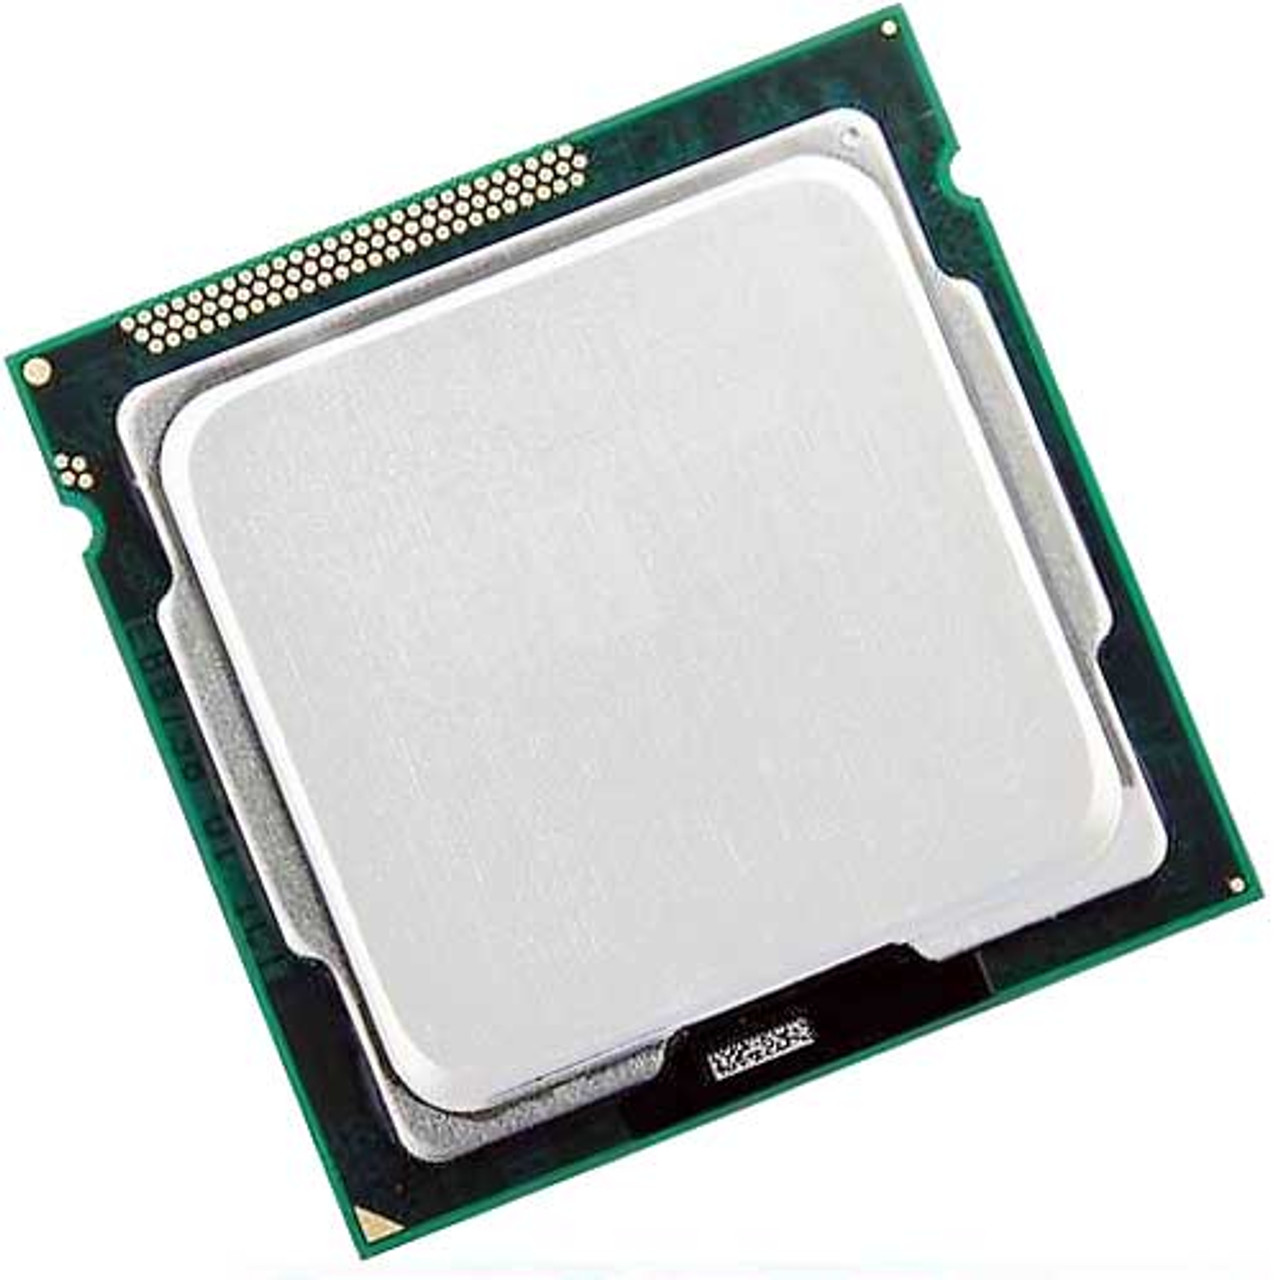 AMD Sempron 2800+ 1.6GHz Processor SDA2800BXBOX UPC 730143742801 - SDA2800BXBOX